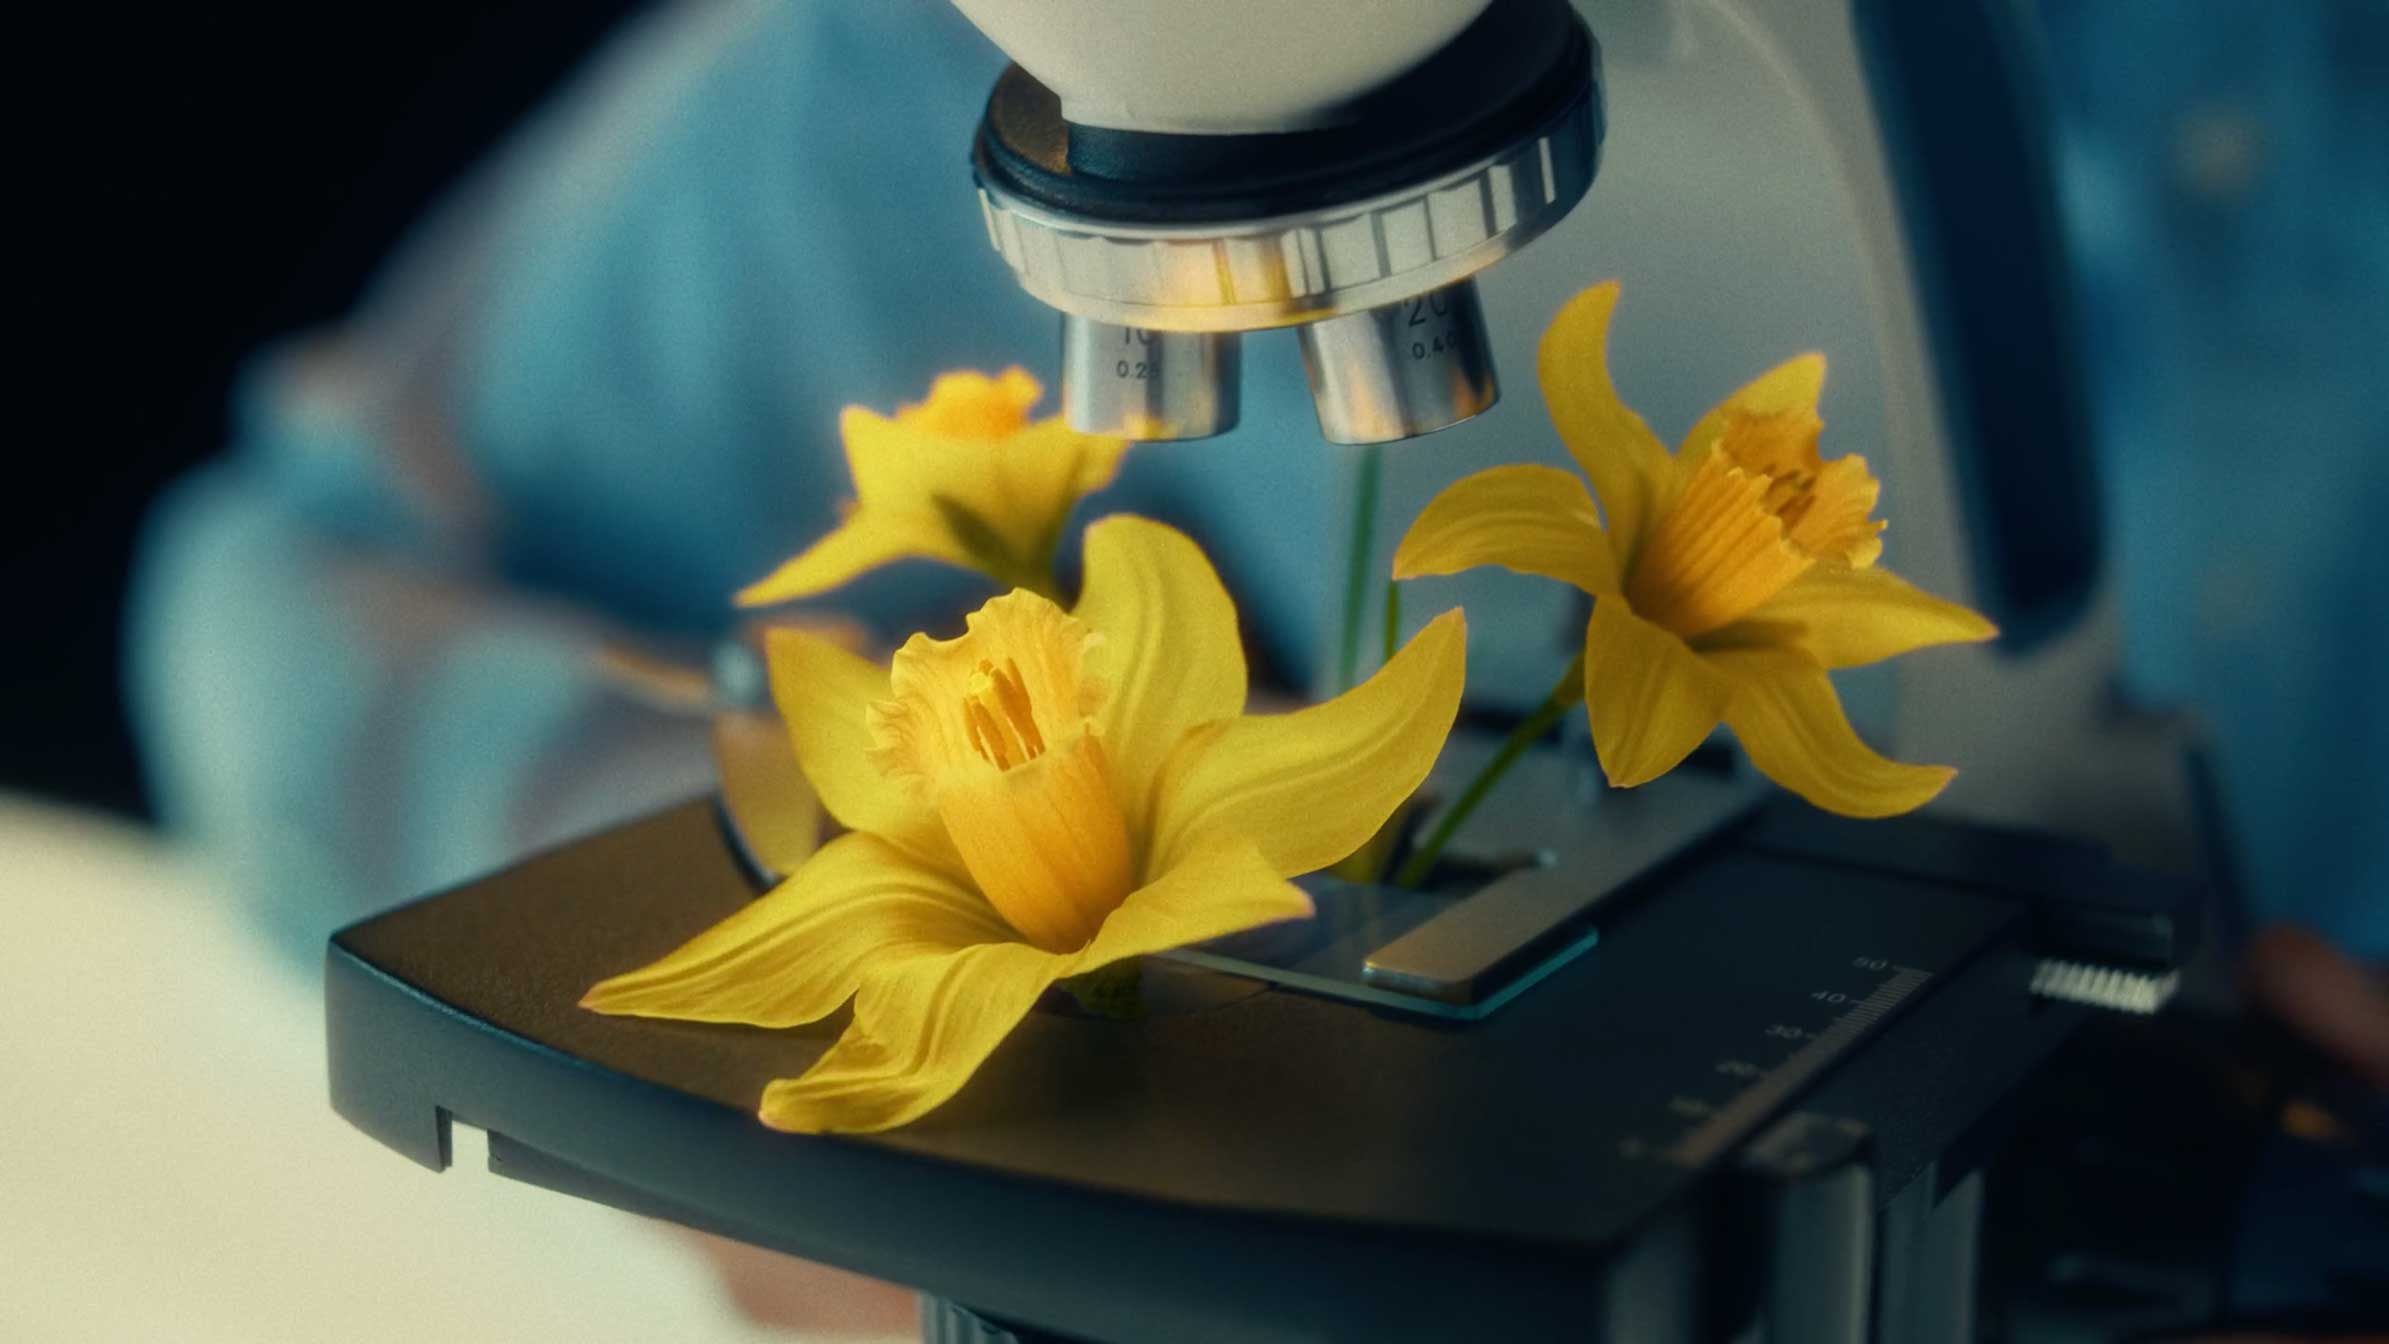 Canadian Cancer Society Help Hope Bloom Reactiv | STASH MAGAZINE